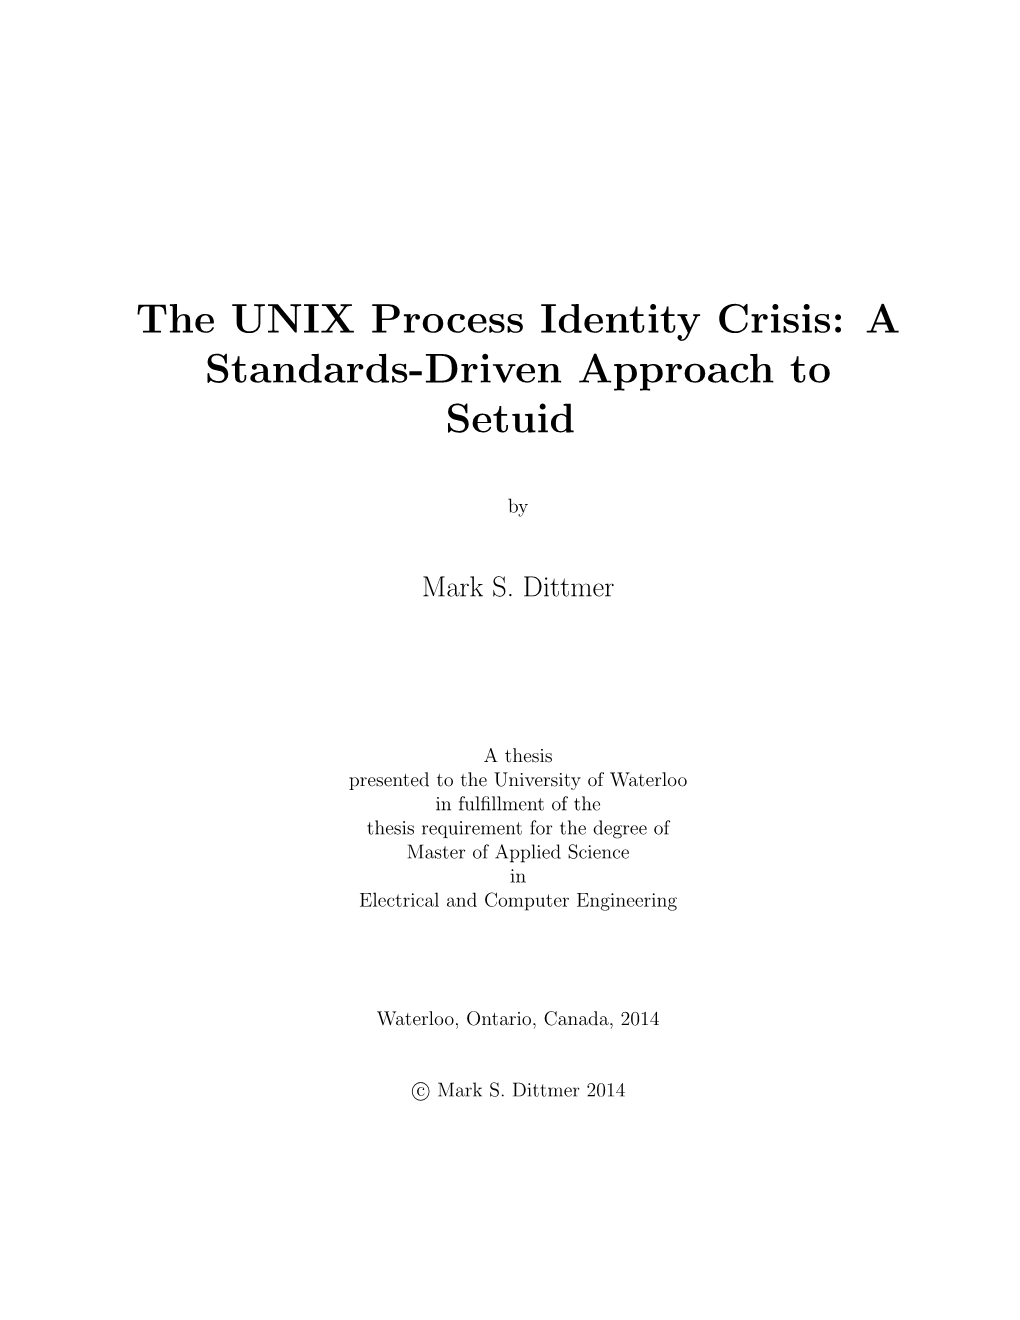 The UNIX Process Identity Crisis: a Standards-Driven Approach to Setuid